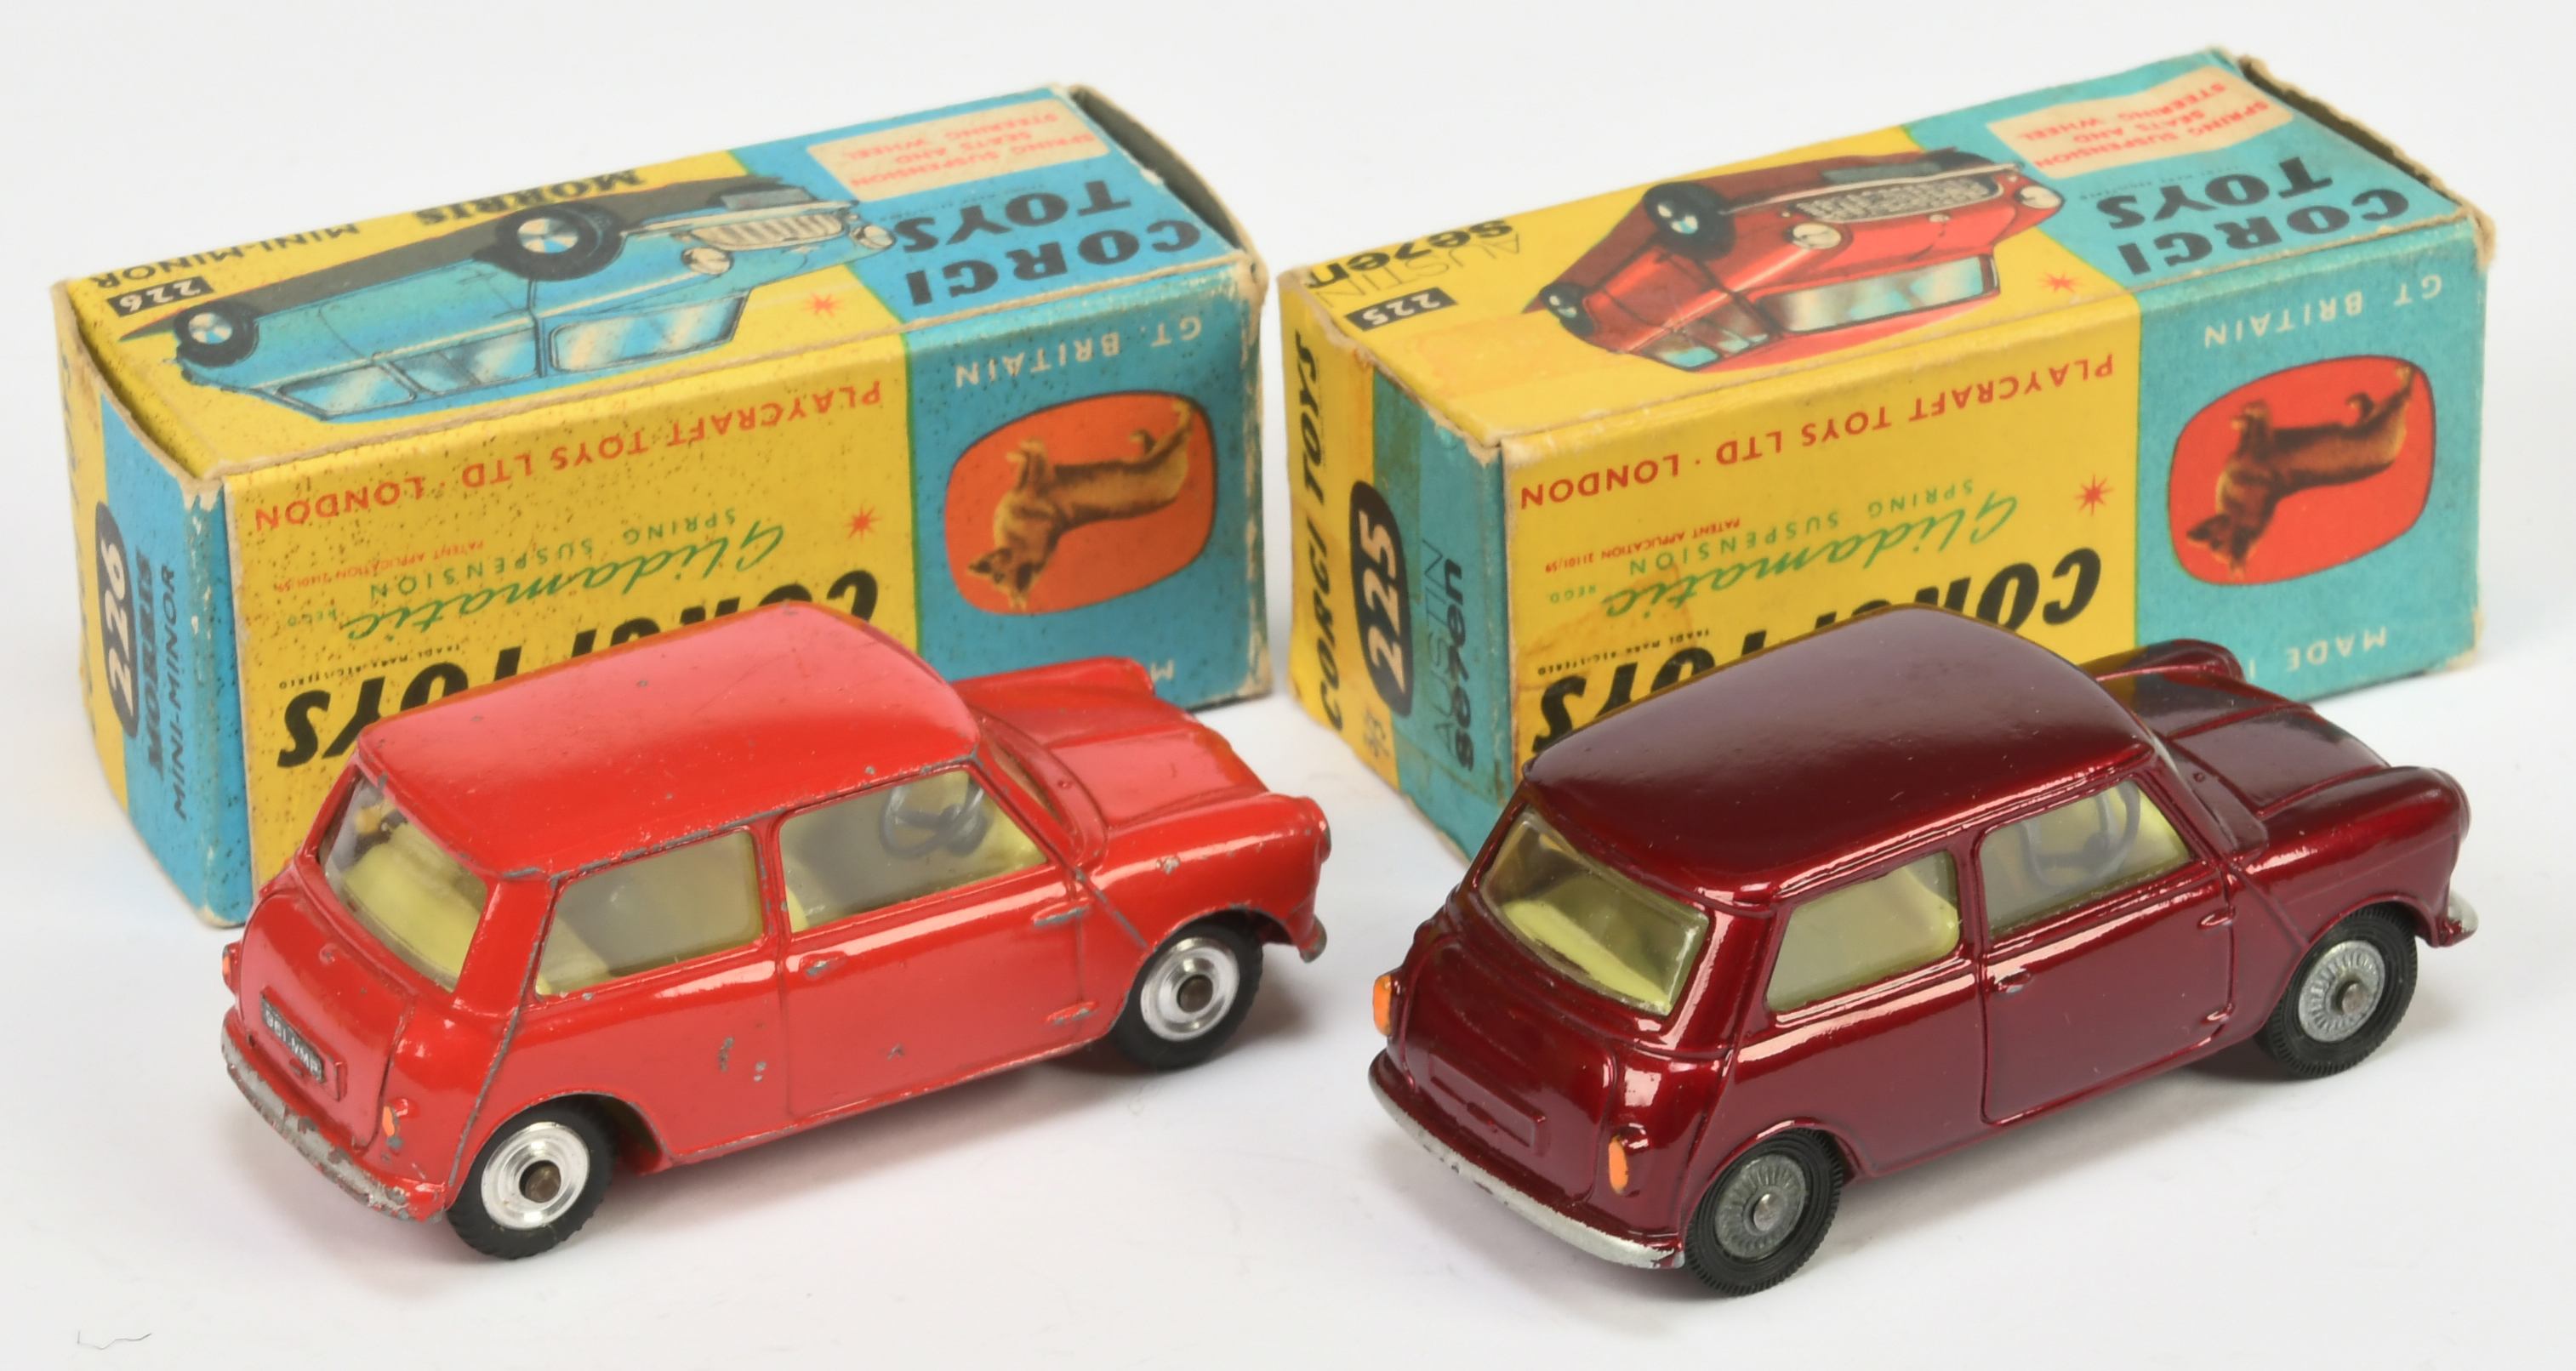 Corgi Toys 225 Austin Seven Mini - Red body, lemon interior, silver trim and spun hubs - Fair and... - Image 2 of 2